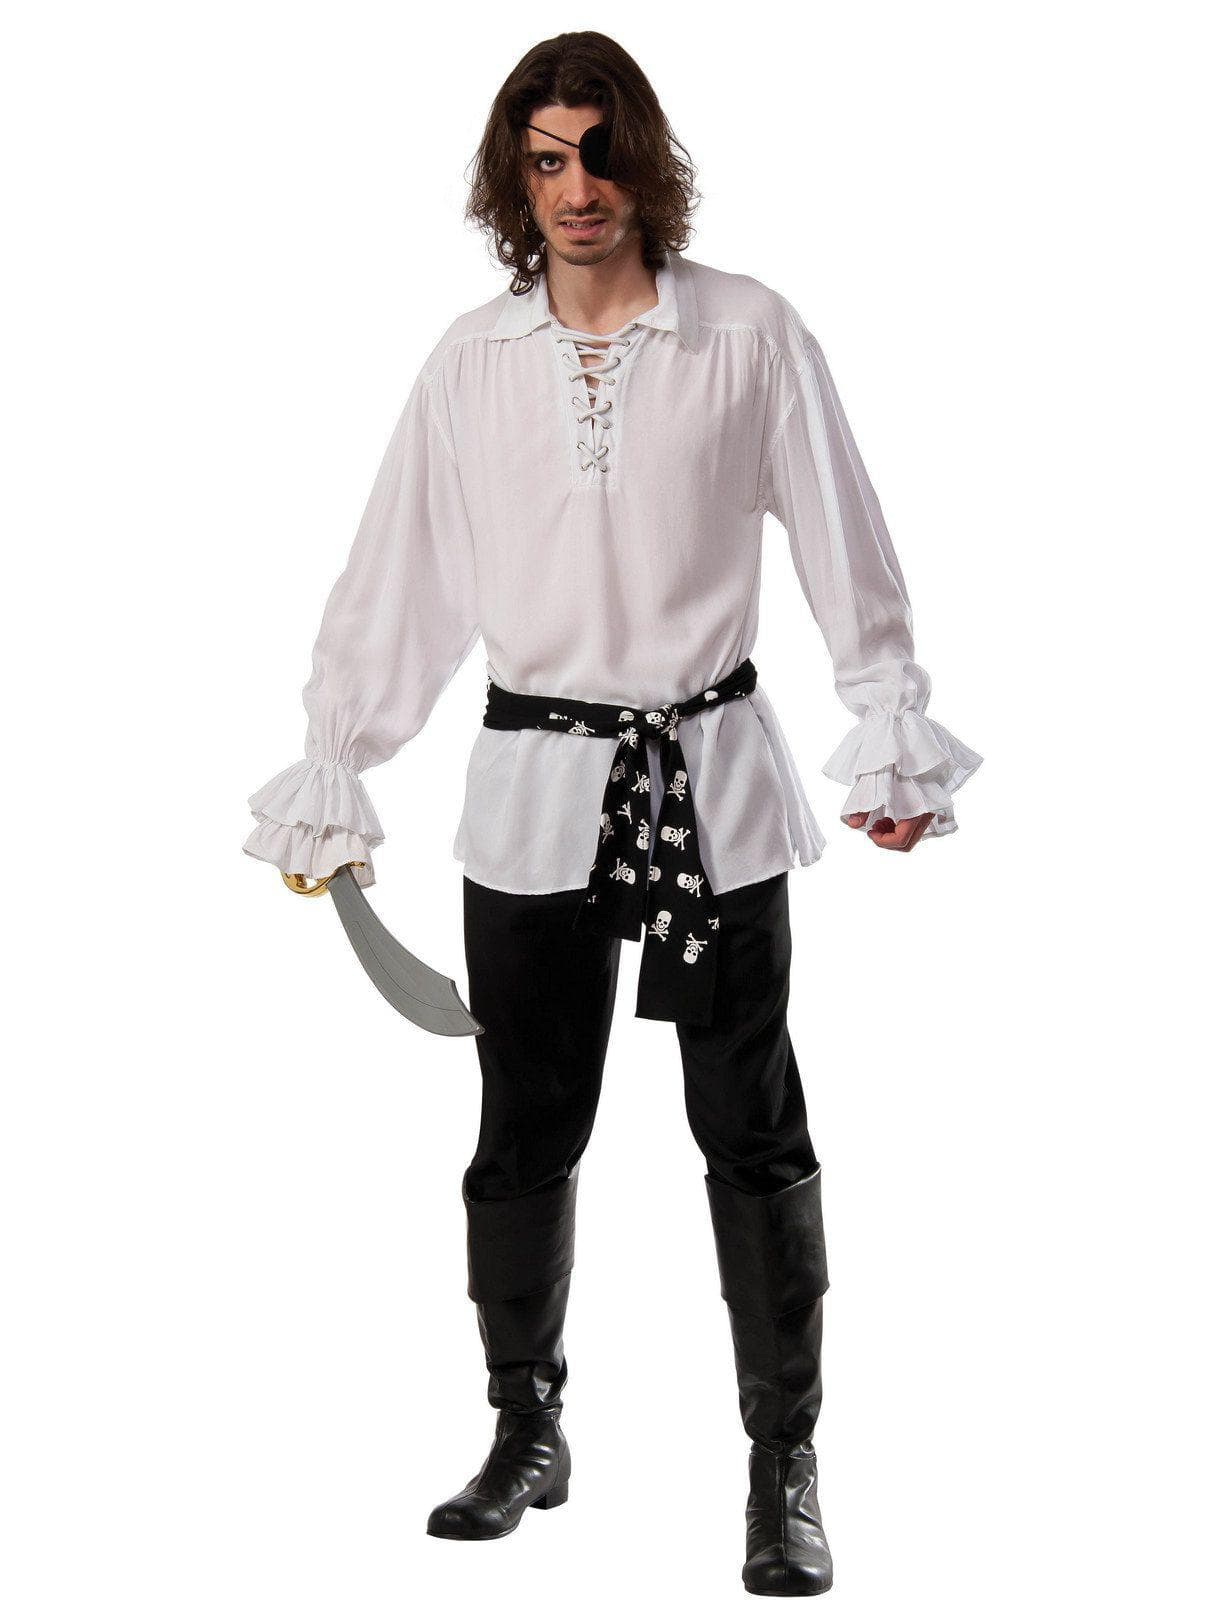 Adult White Pirate Shirt Costume - costumes.com